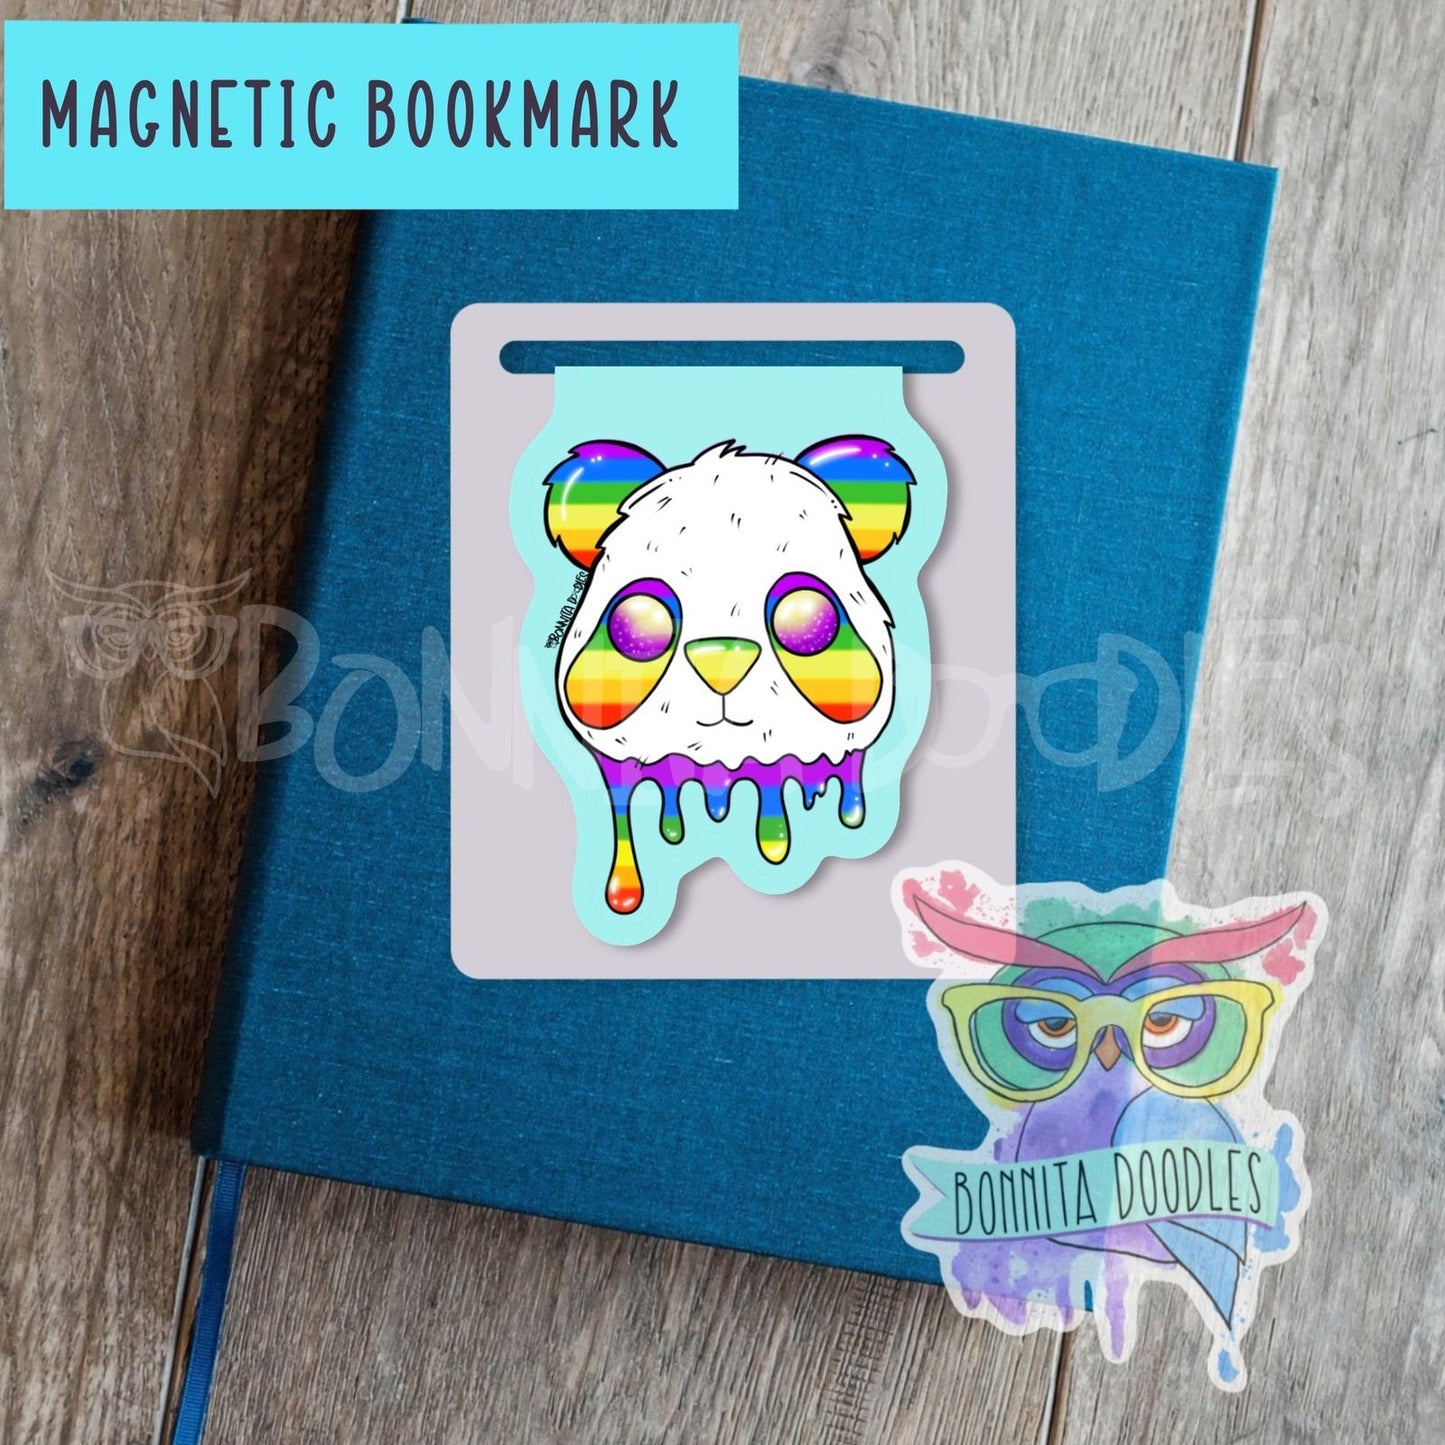 Rainbow Panda magnetic bookmark - the perfect gift